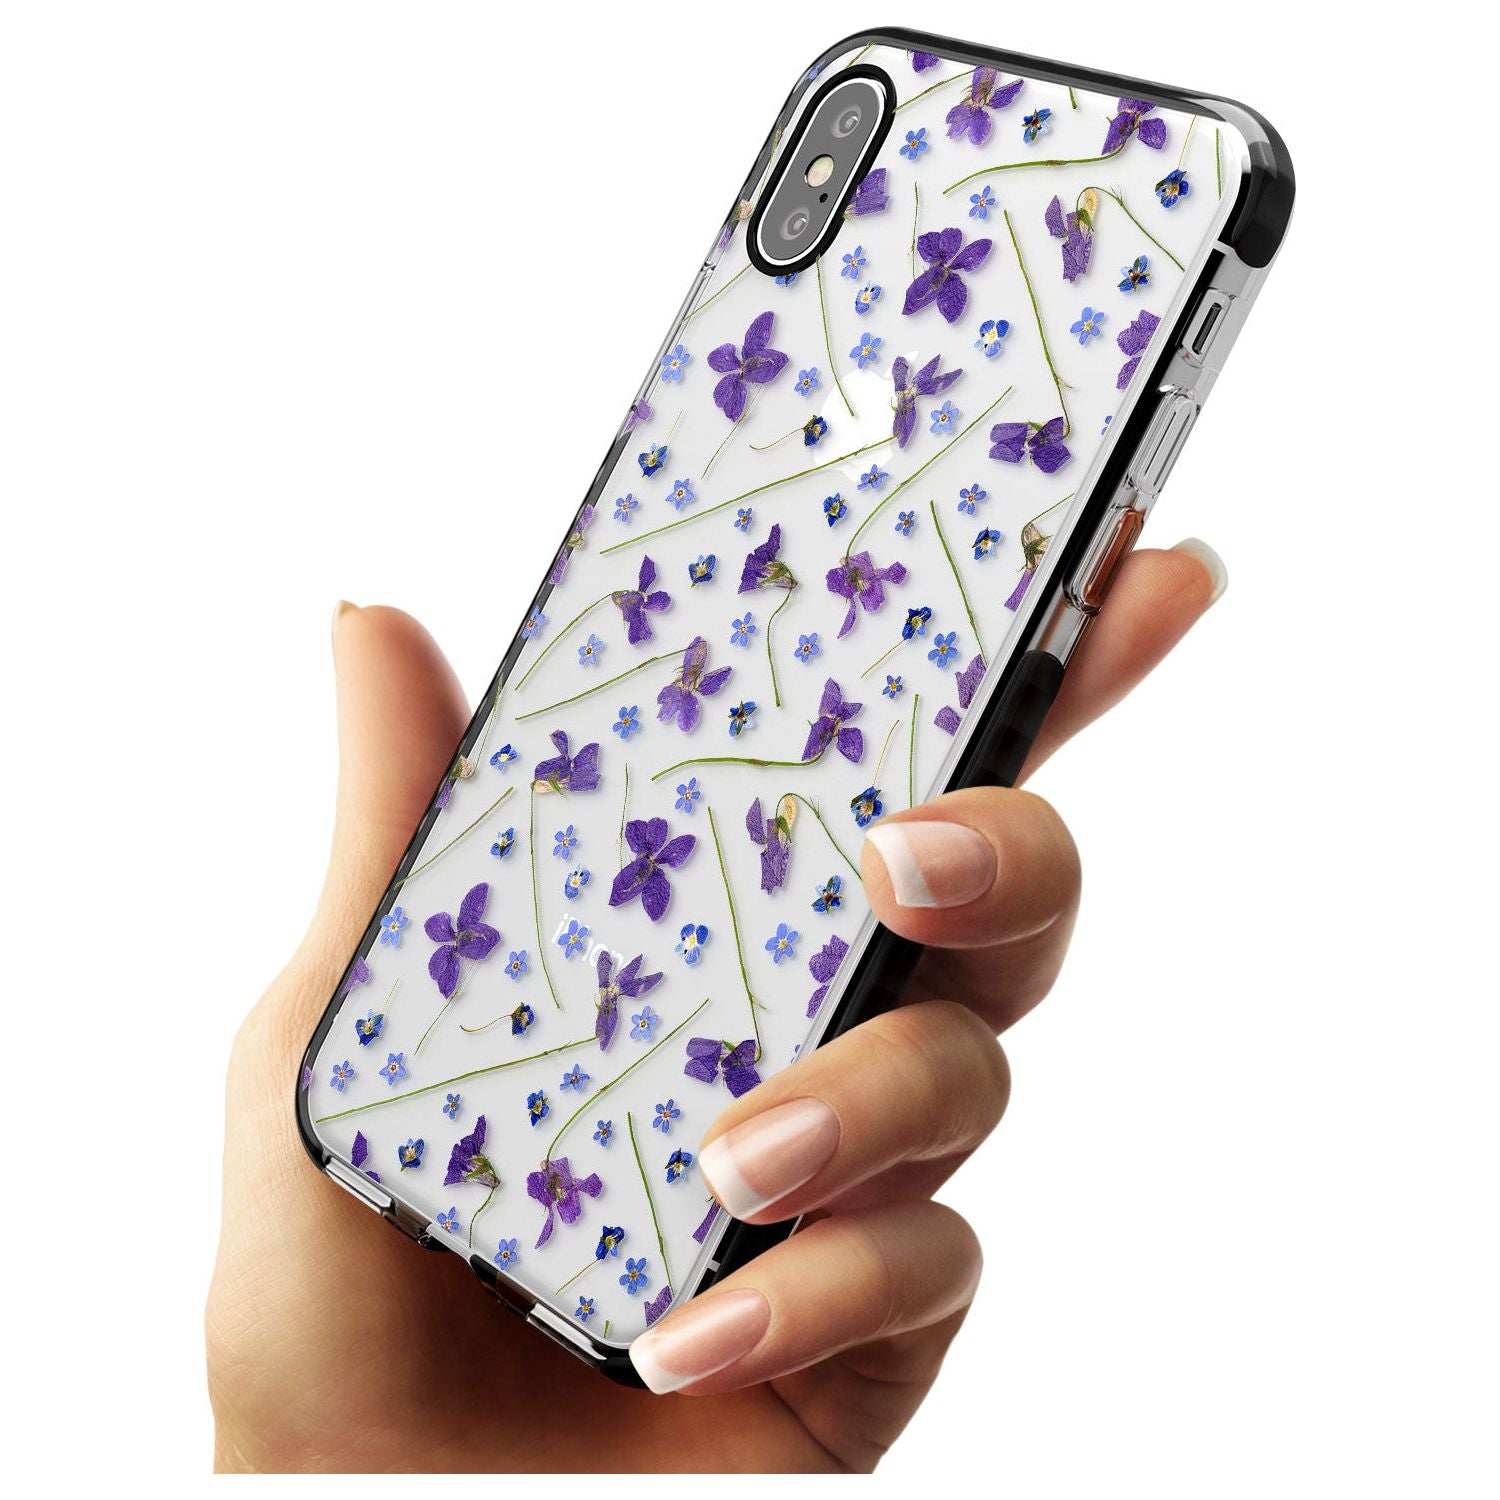 Violet & Blue Floral Pattern Design Black Impact Phone Case for iPhone X XS Max XR